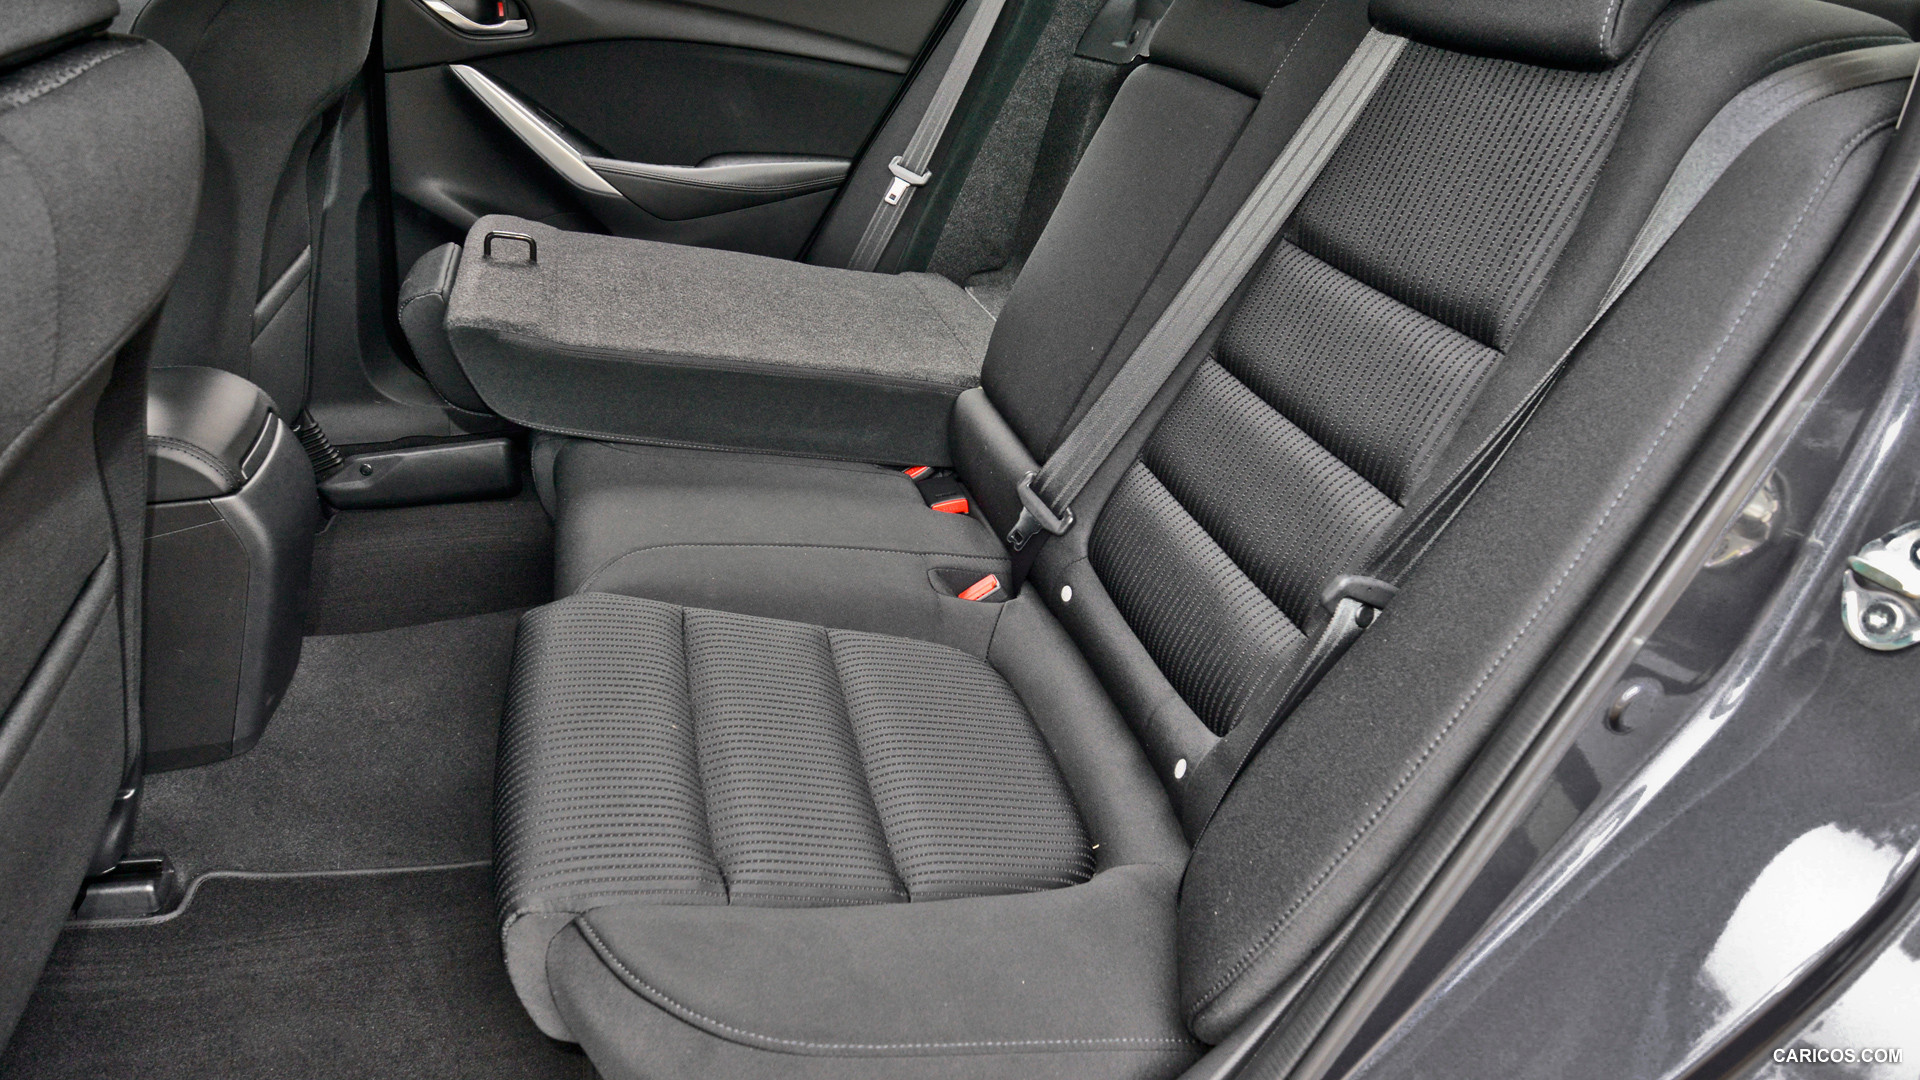 2014 Mazda6 Sport - Interior Rear Seats, #102 of 179